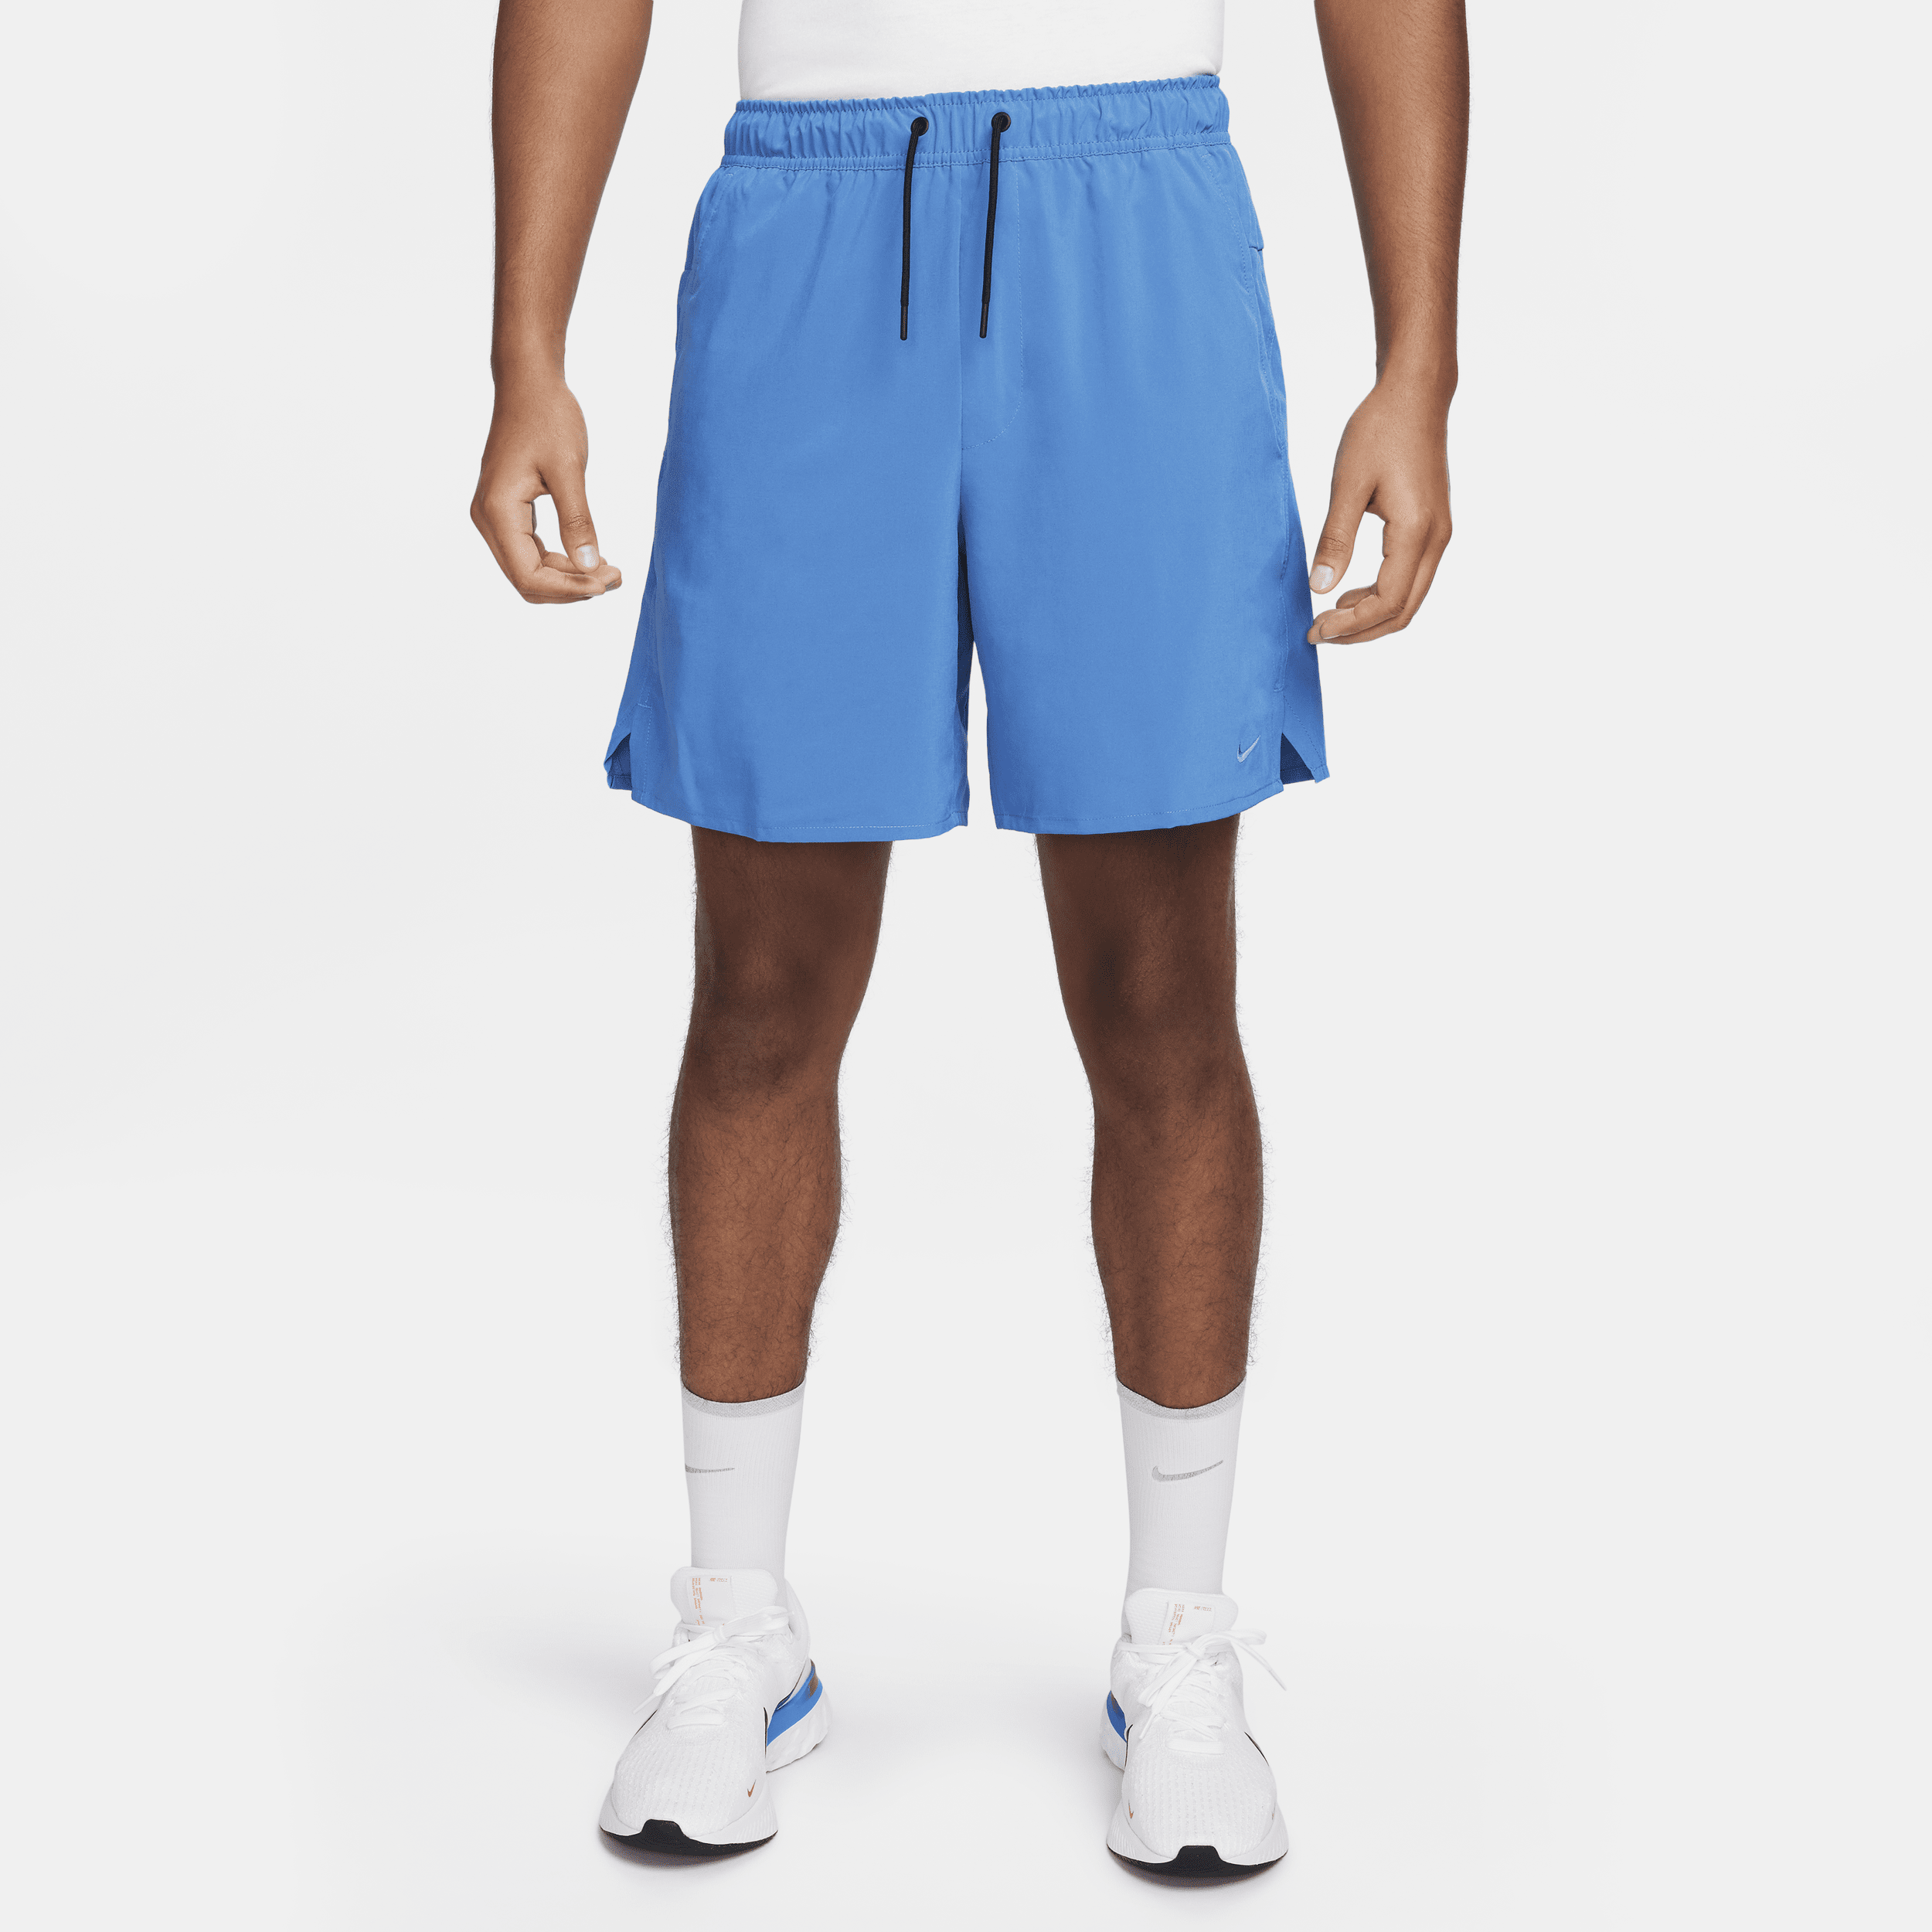 Nike Unlimited multifunctionele niet-gevoerde herenshorts met Dri-FIT (18 cm) Blauw